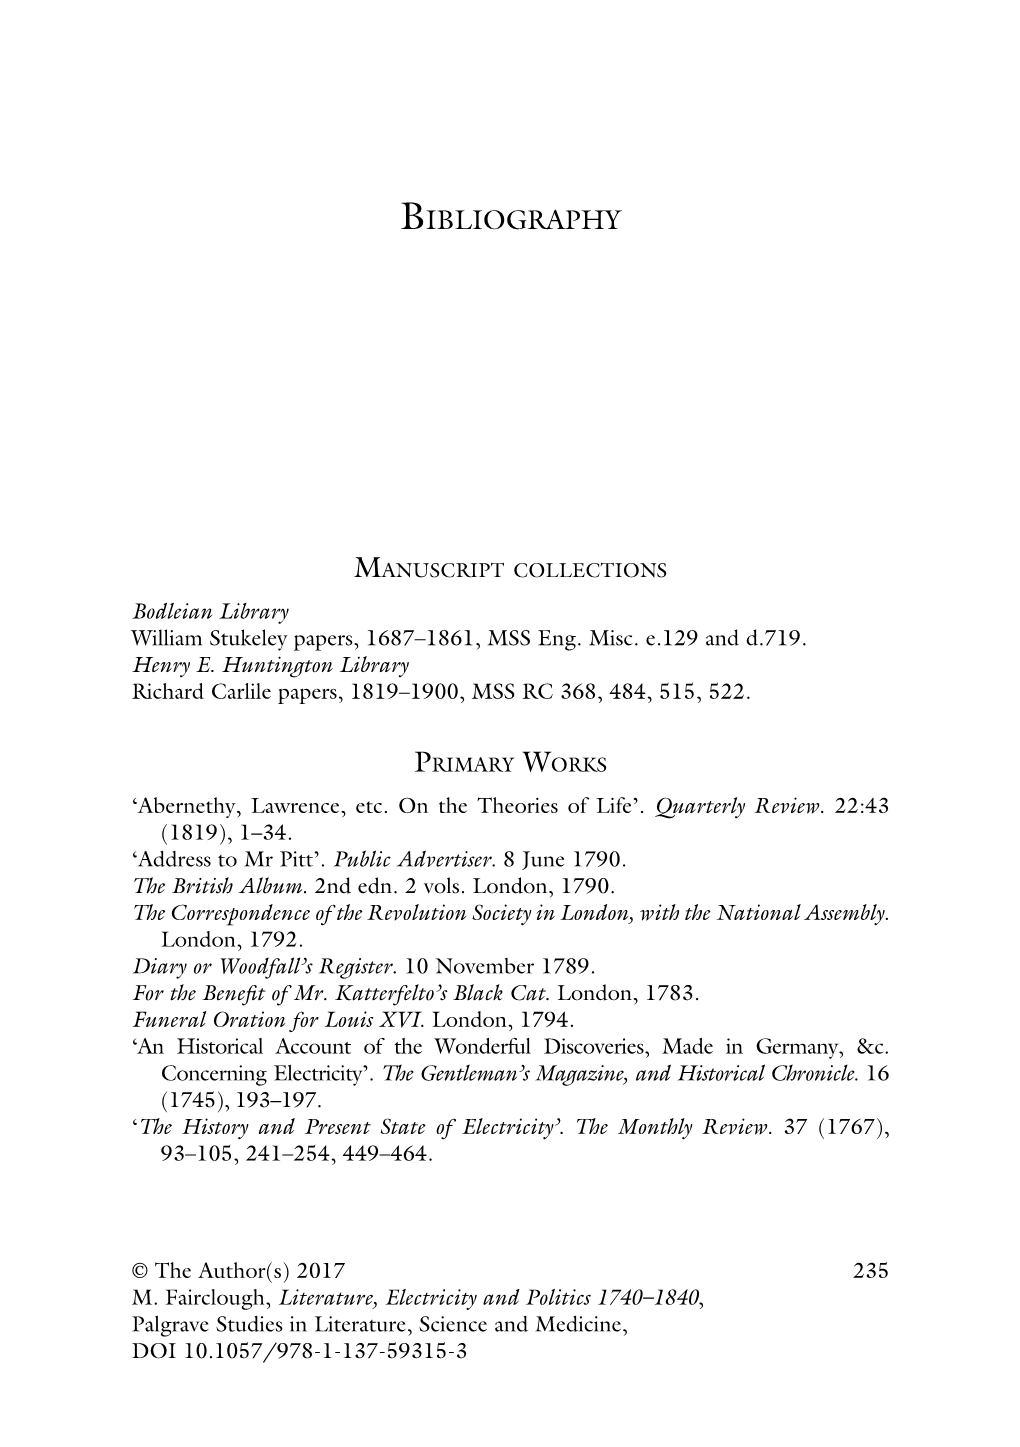 Literature, Electricity and Politics 1740–1840, Palgrave Studies in Literature, Science and Medicine, DOI 10.1057/978-1-137-59315-3 236 BIBLIOGRAPHY